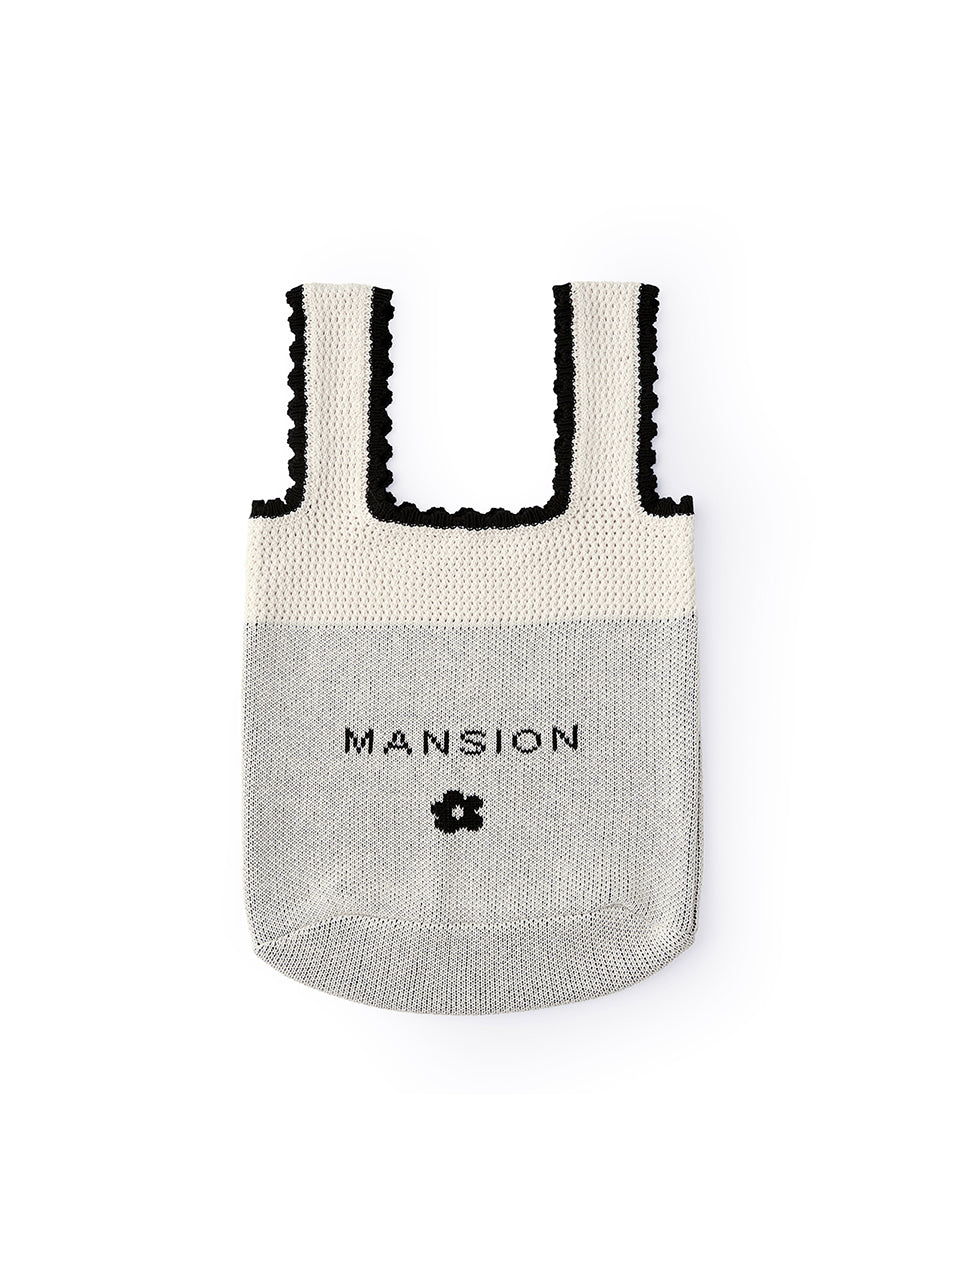 Mansion knit bag - Cream